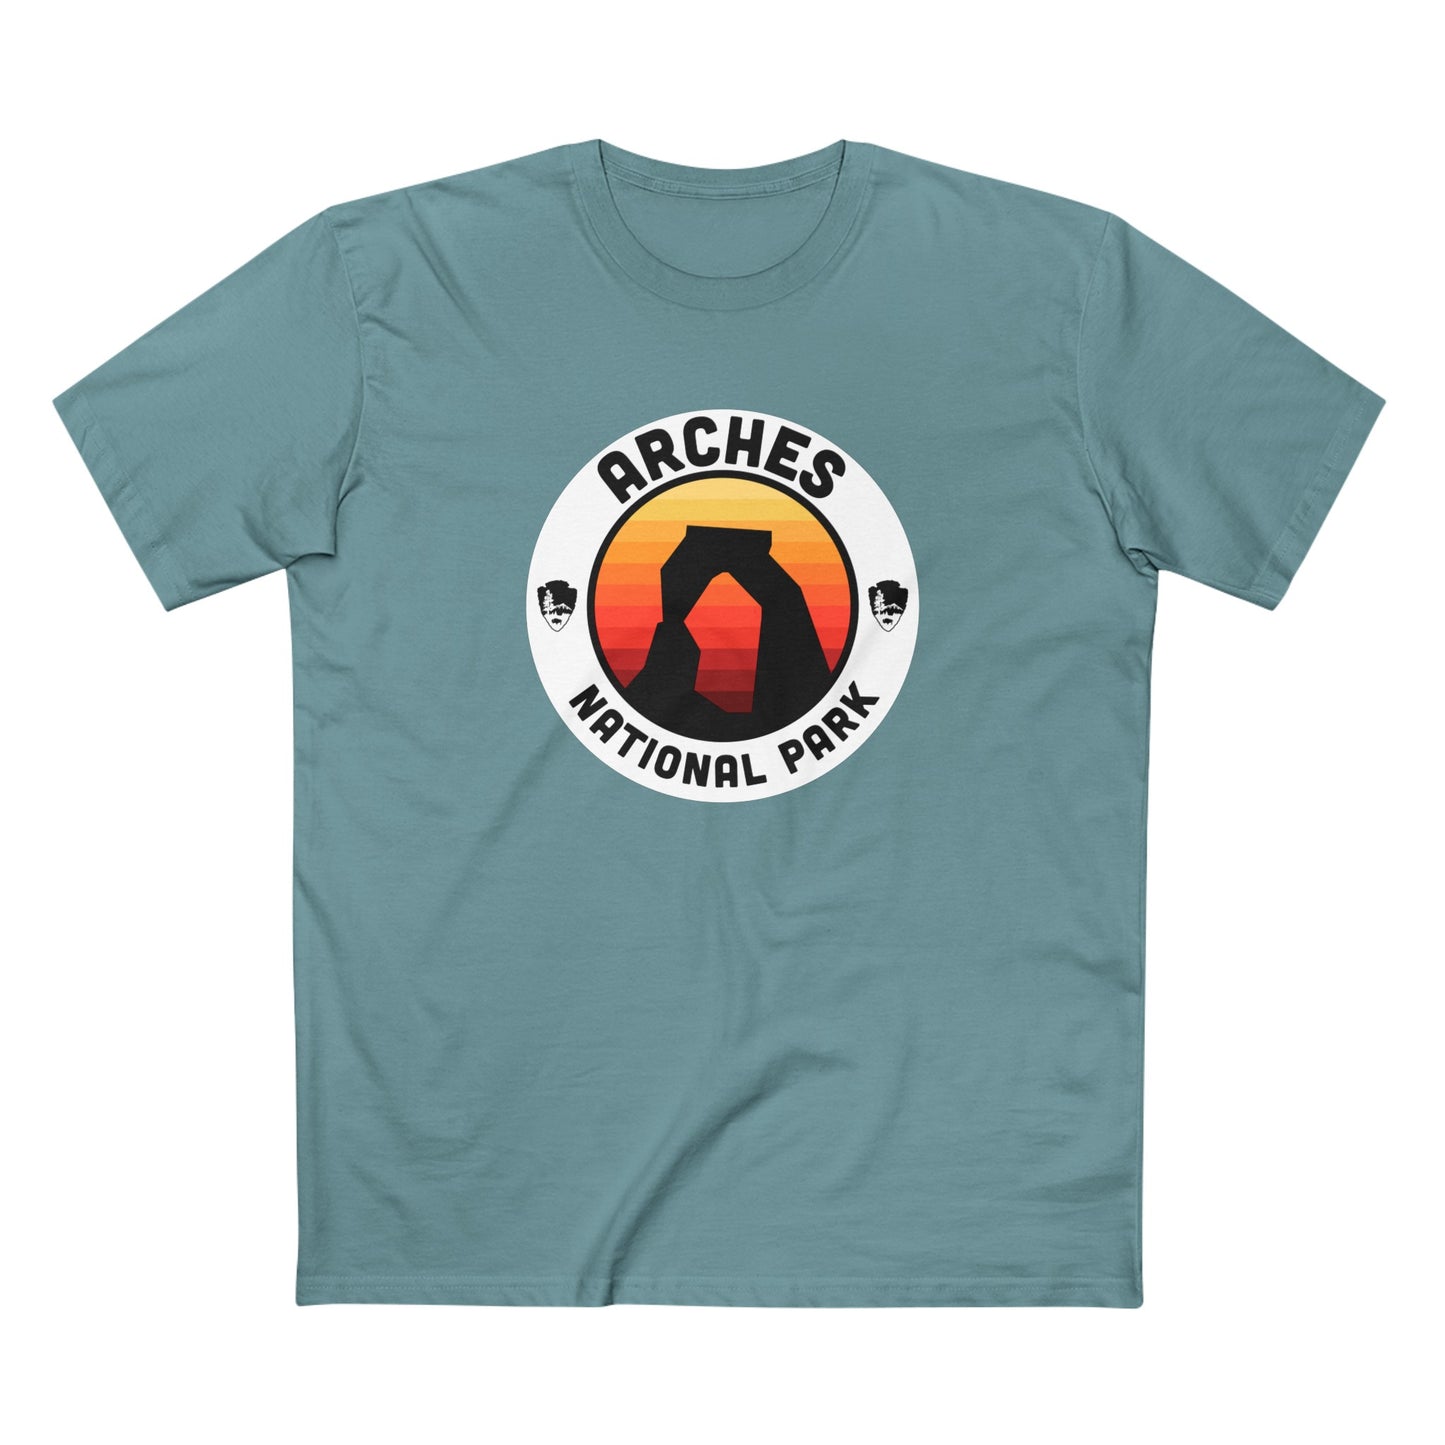 Arches National Park T-Shirt - Round Badge Design